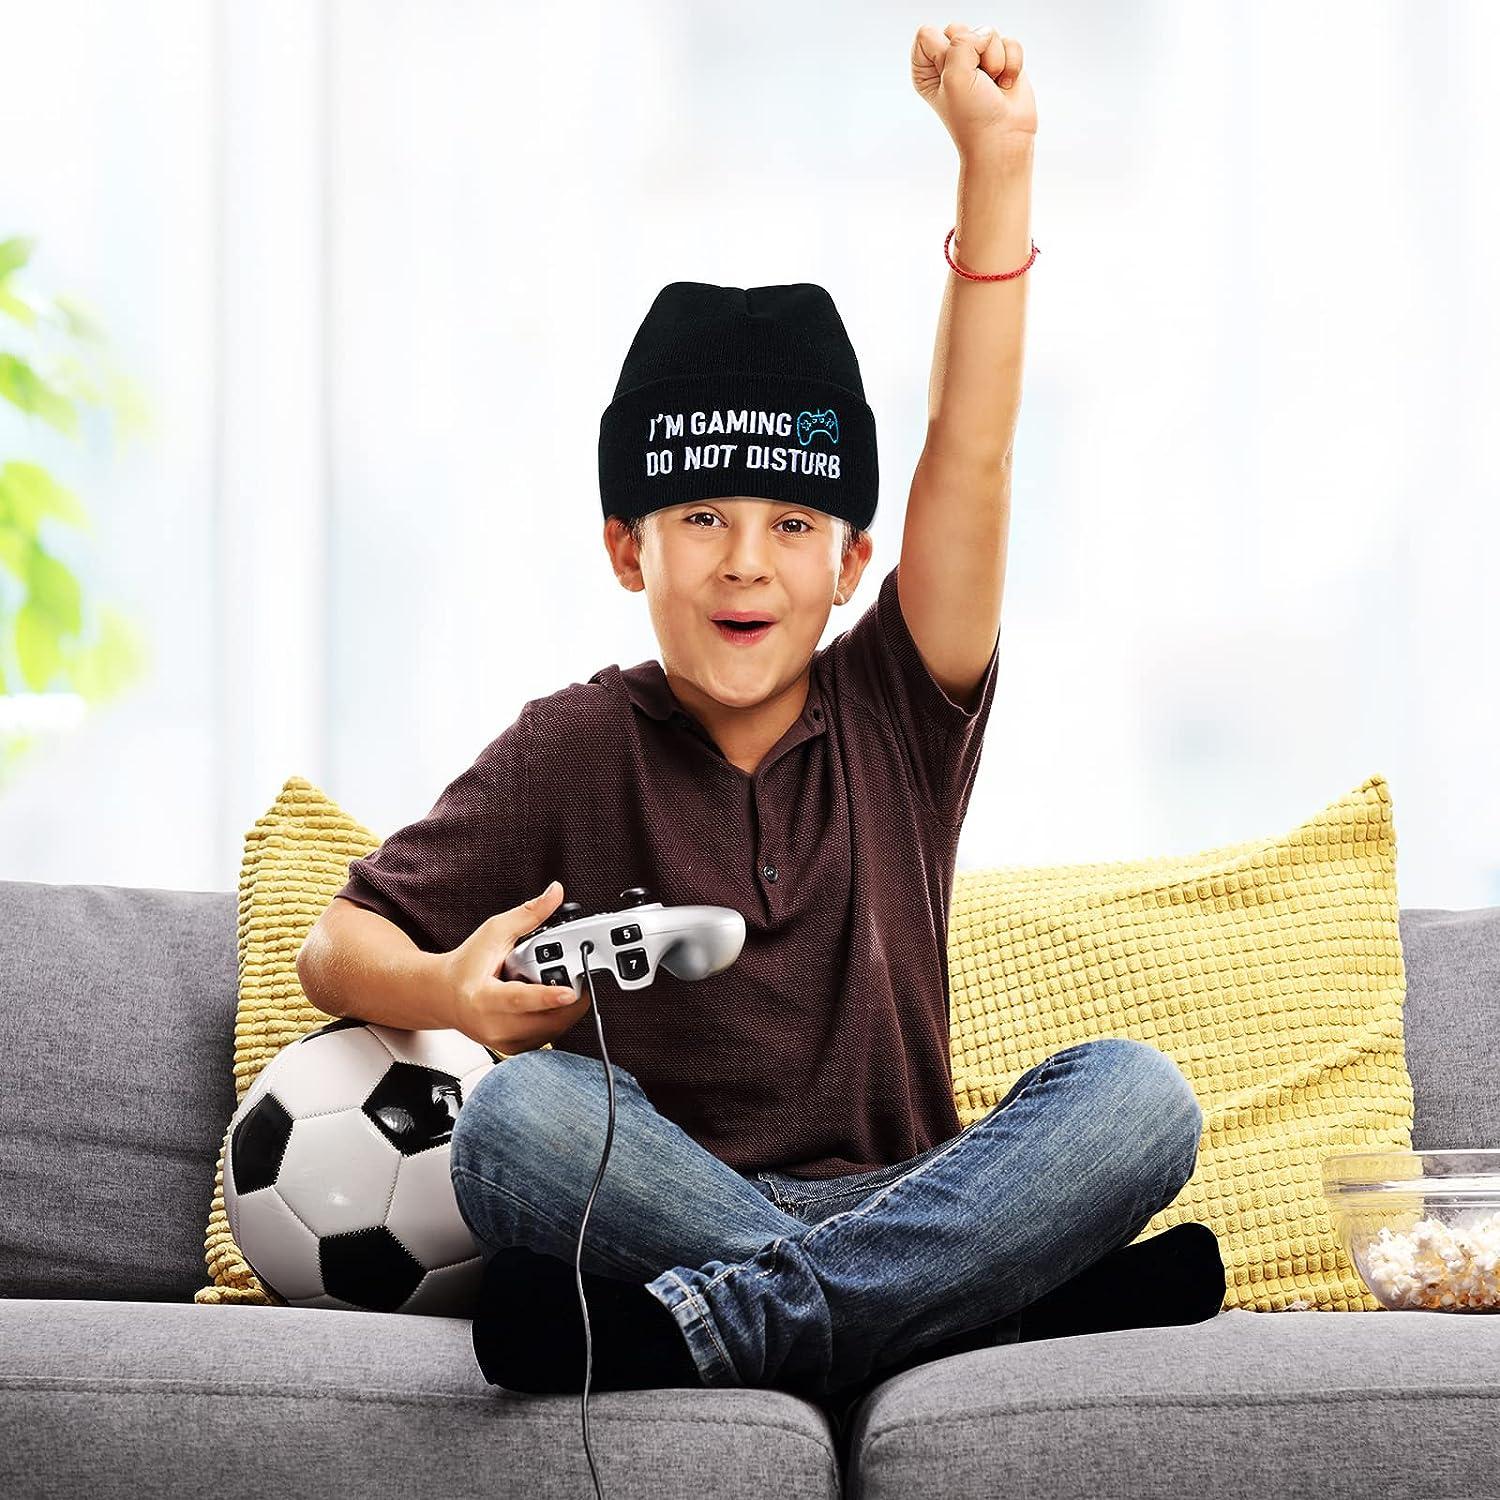 Funny Gaming Socks Stocking Stuffers for Adults Men Teen Boys